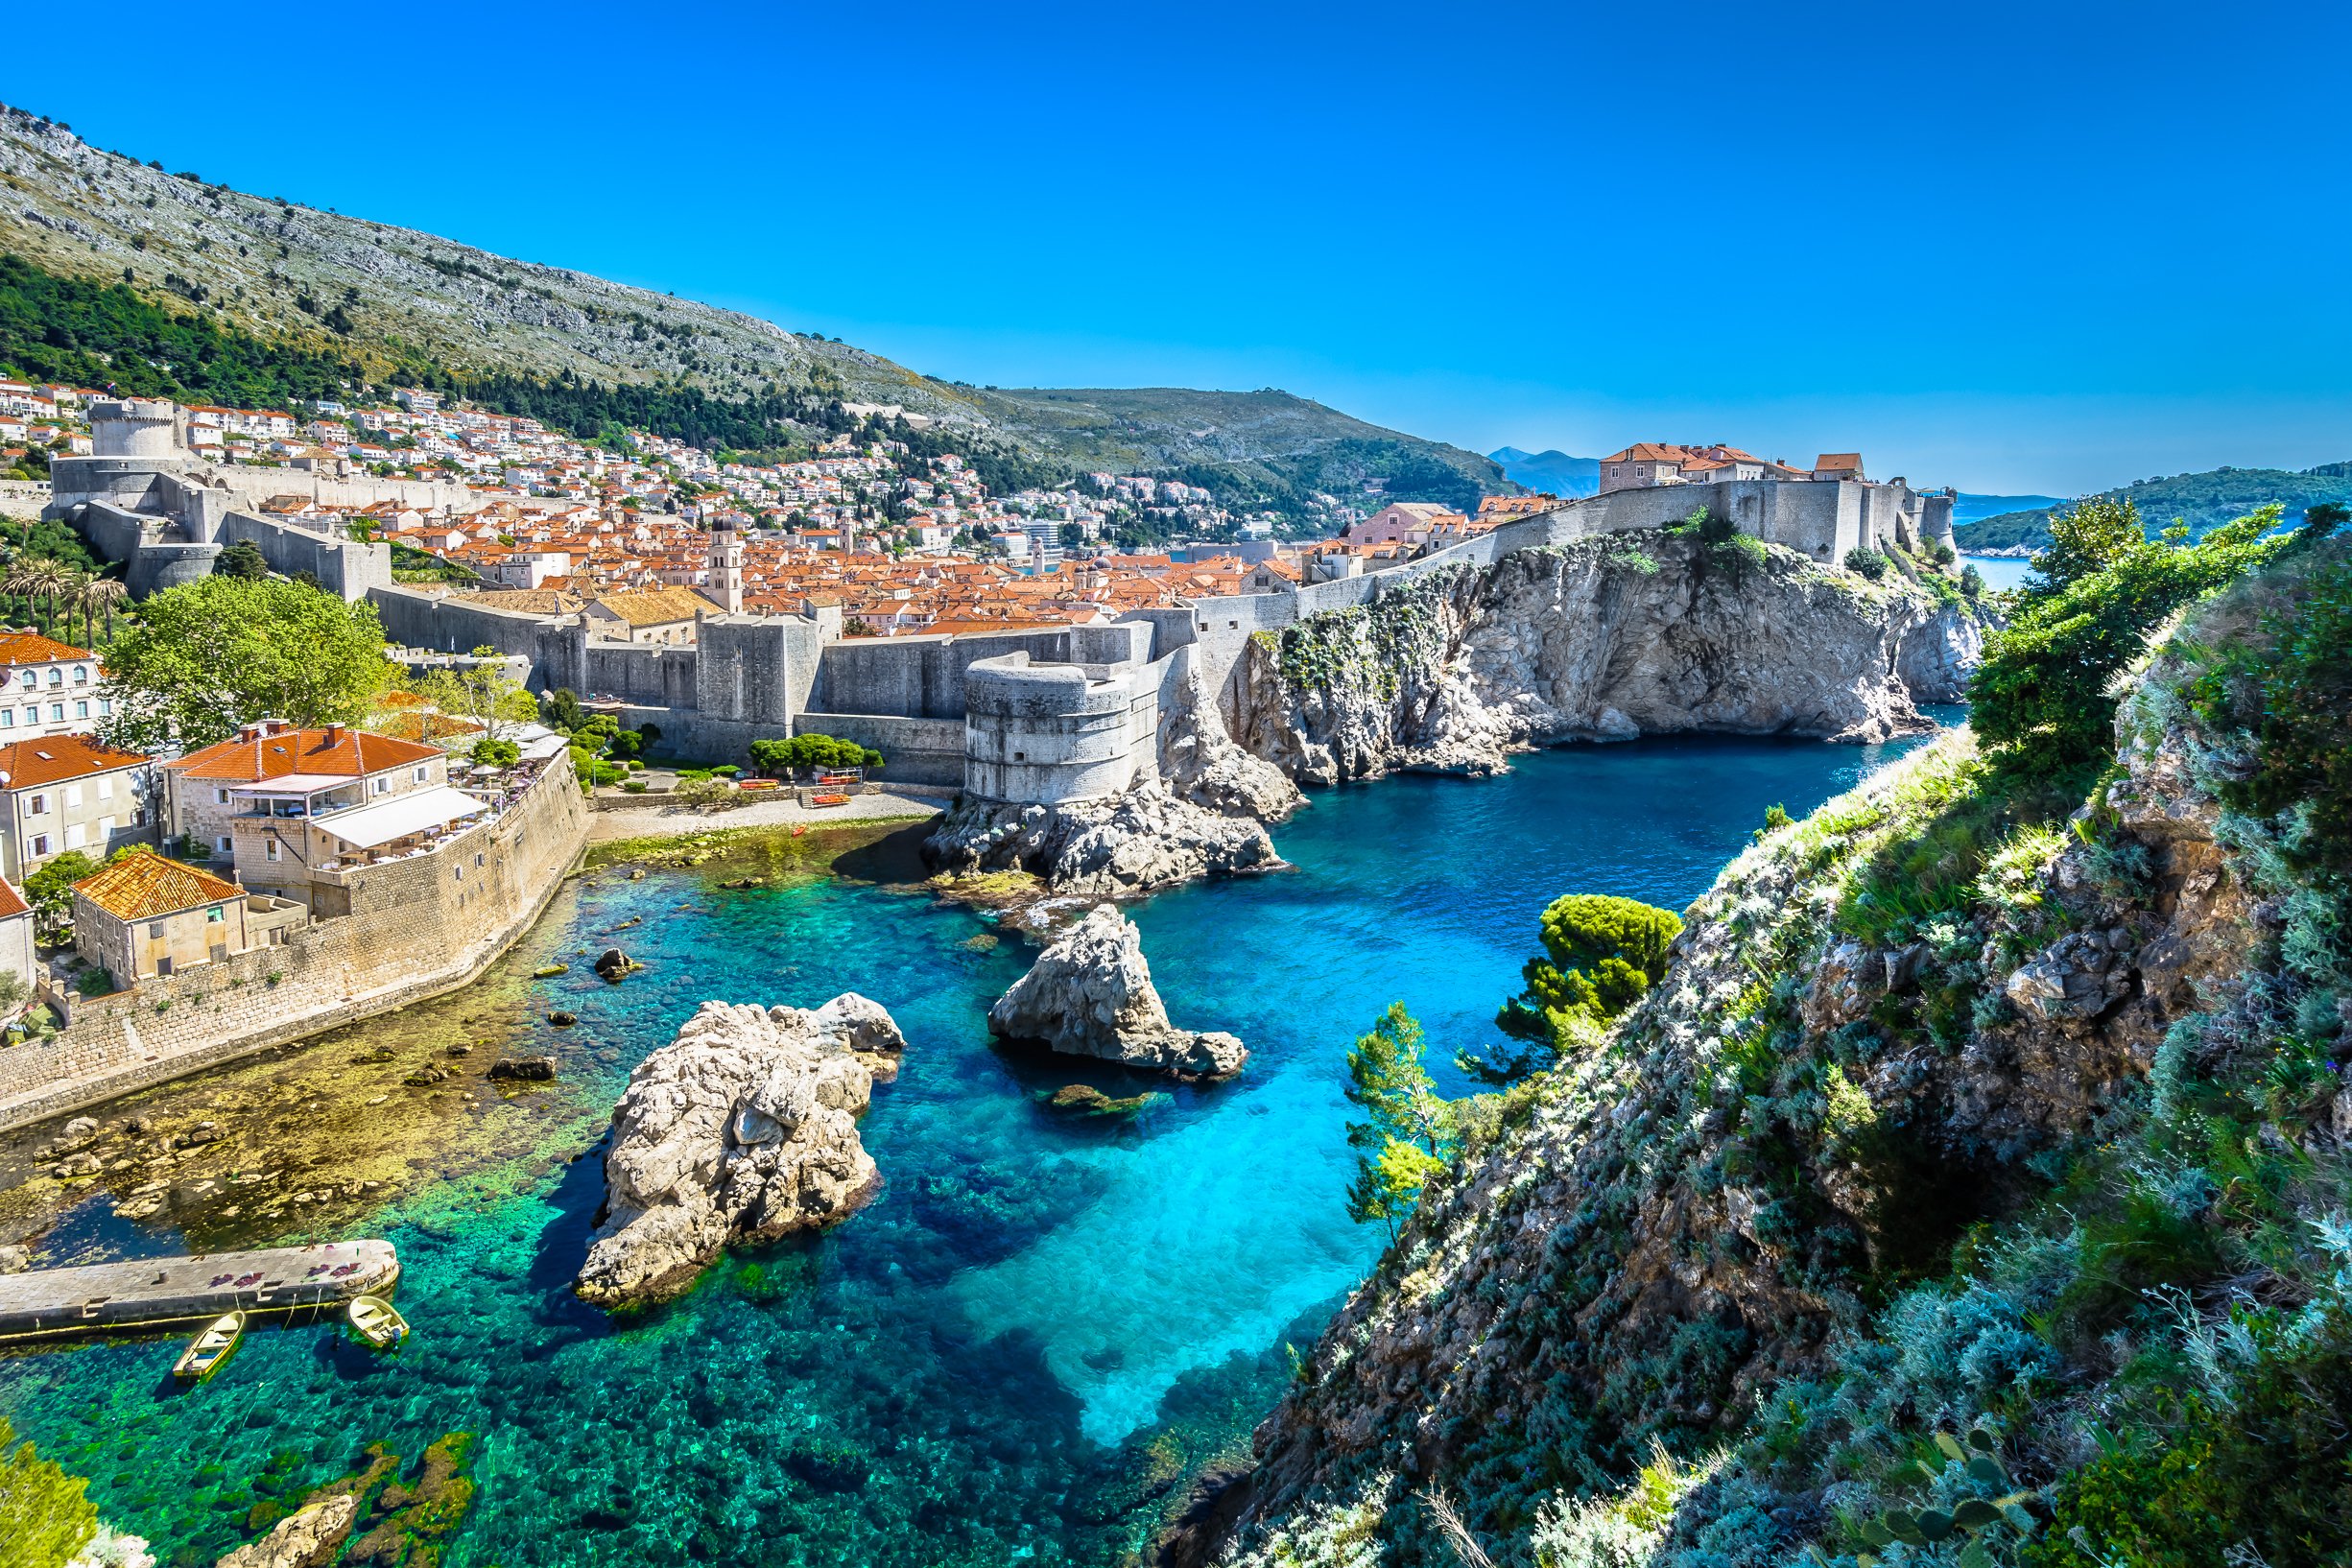 Italy & Croatia's Dalmatian Coast